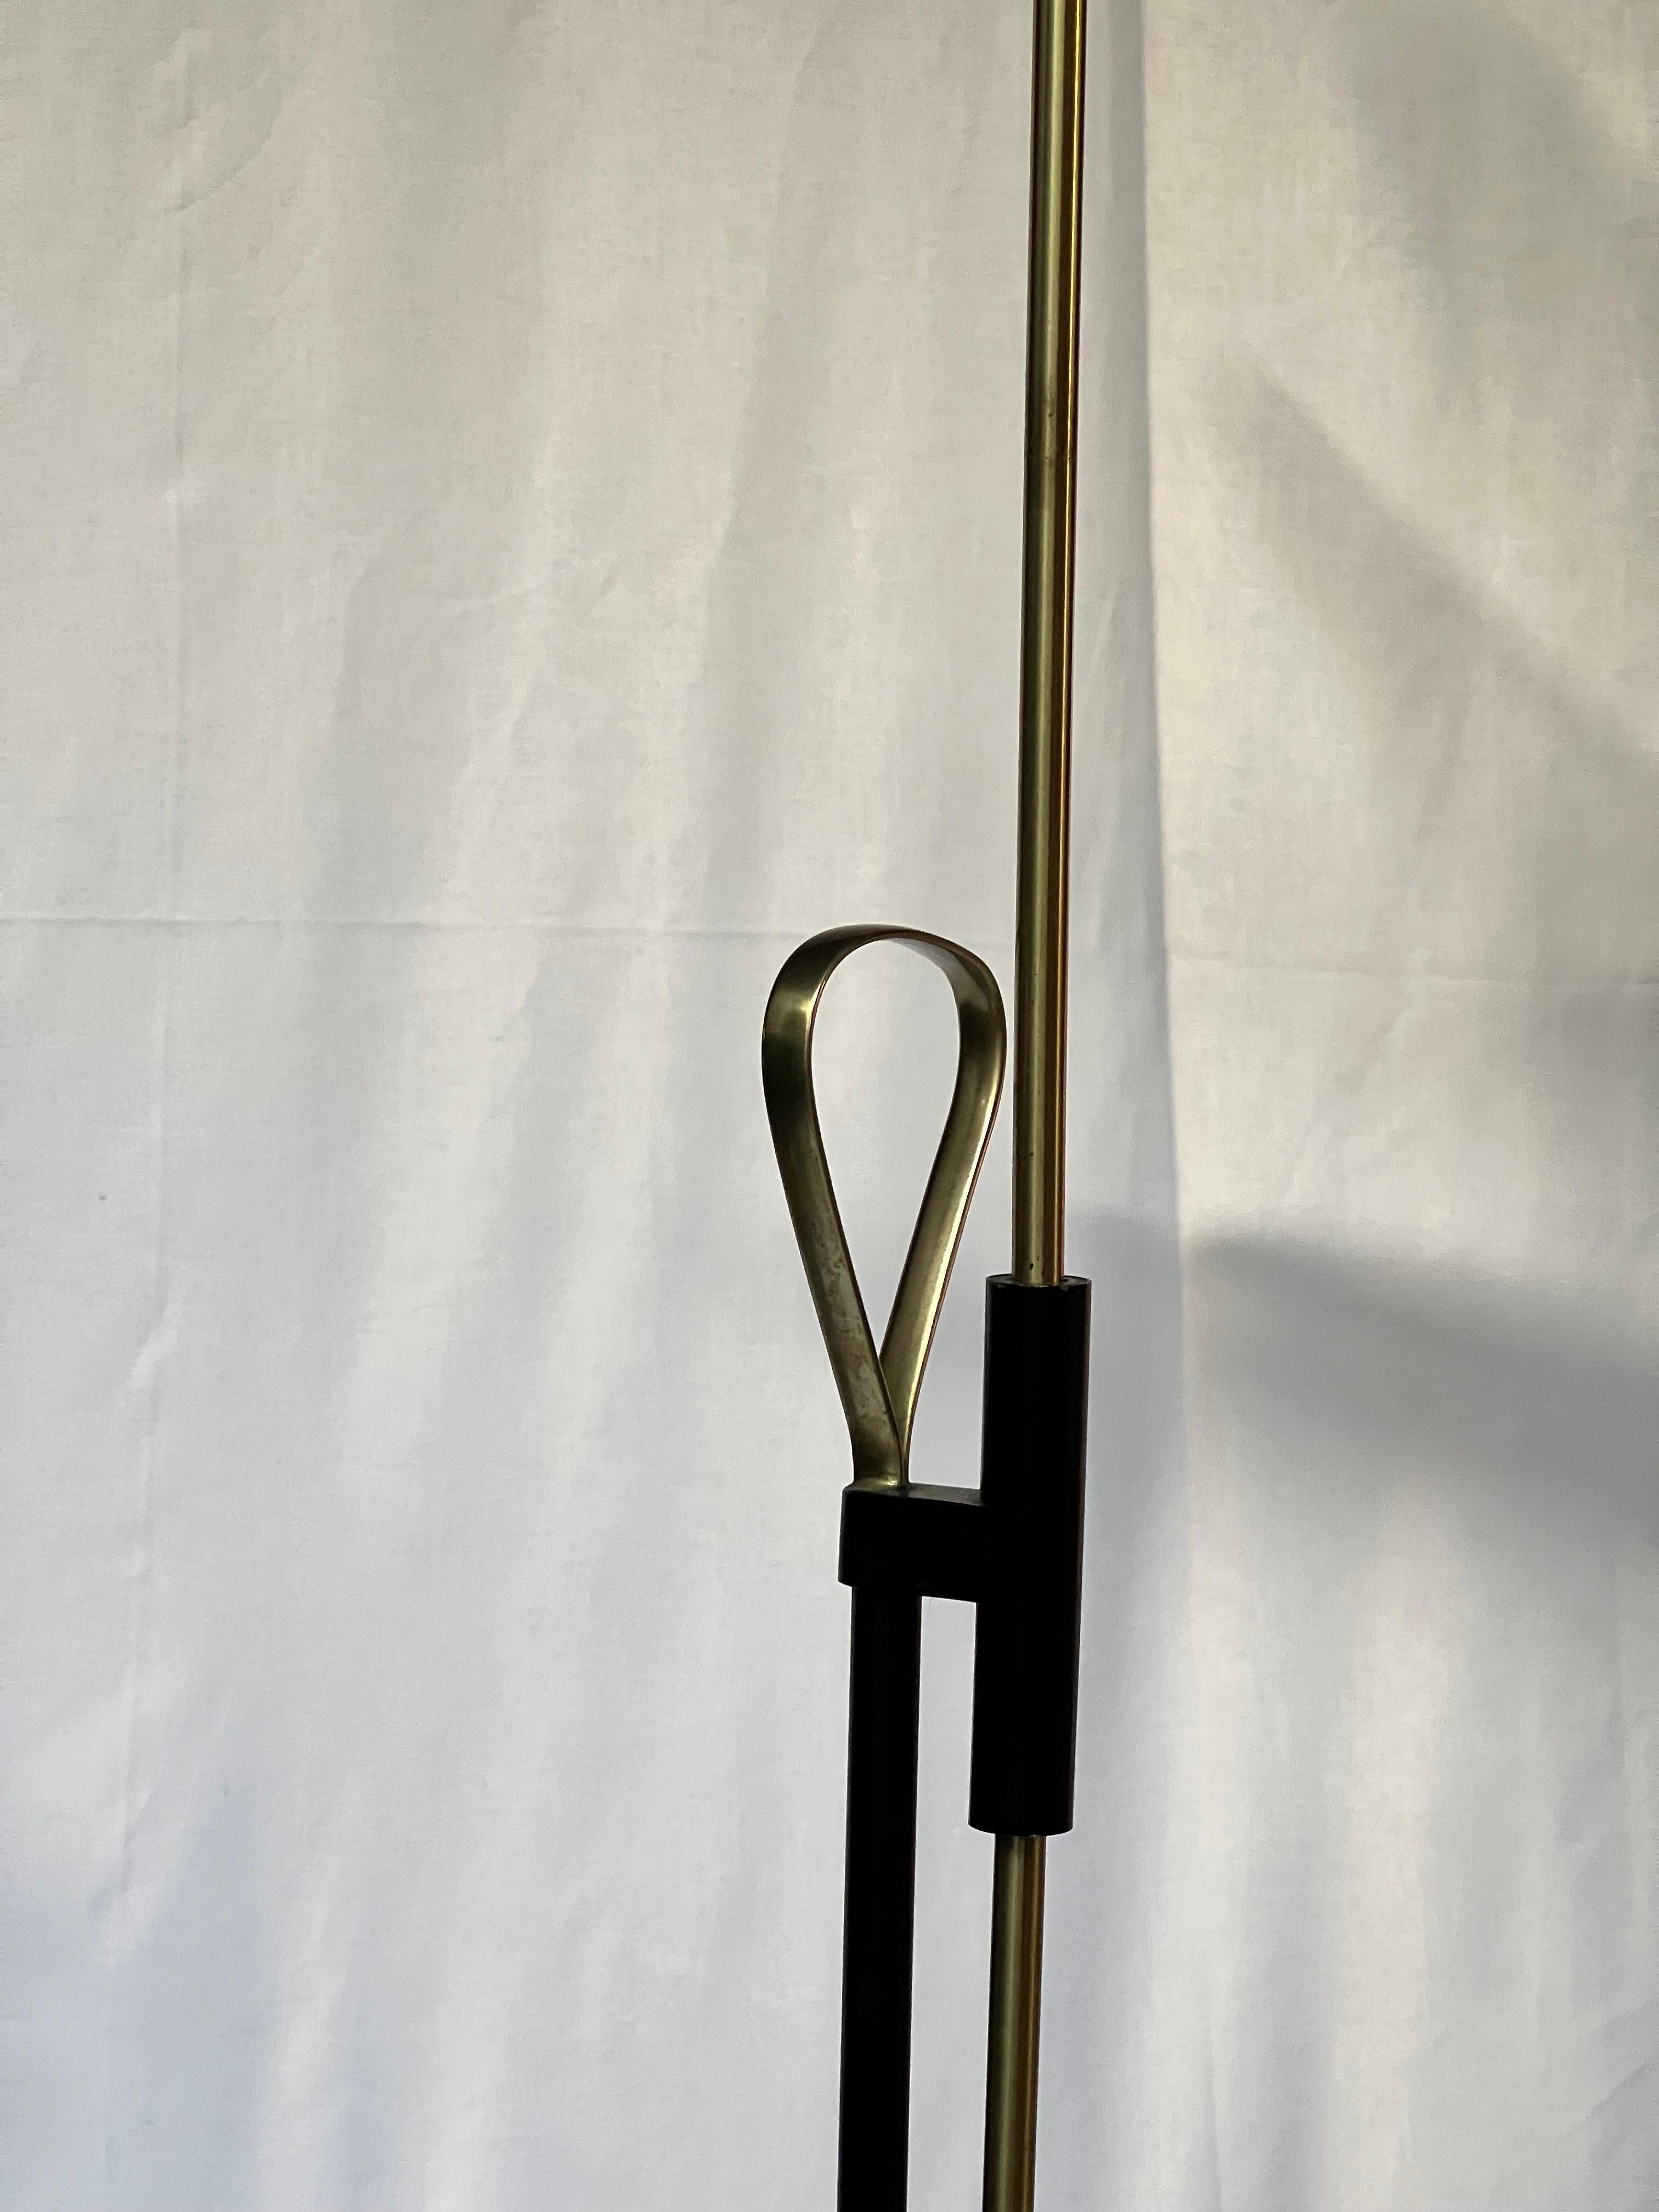 Falkenberg Brass Floor Lamp Adjustable in Height Sweden 1960's For Sale 2